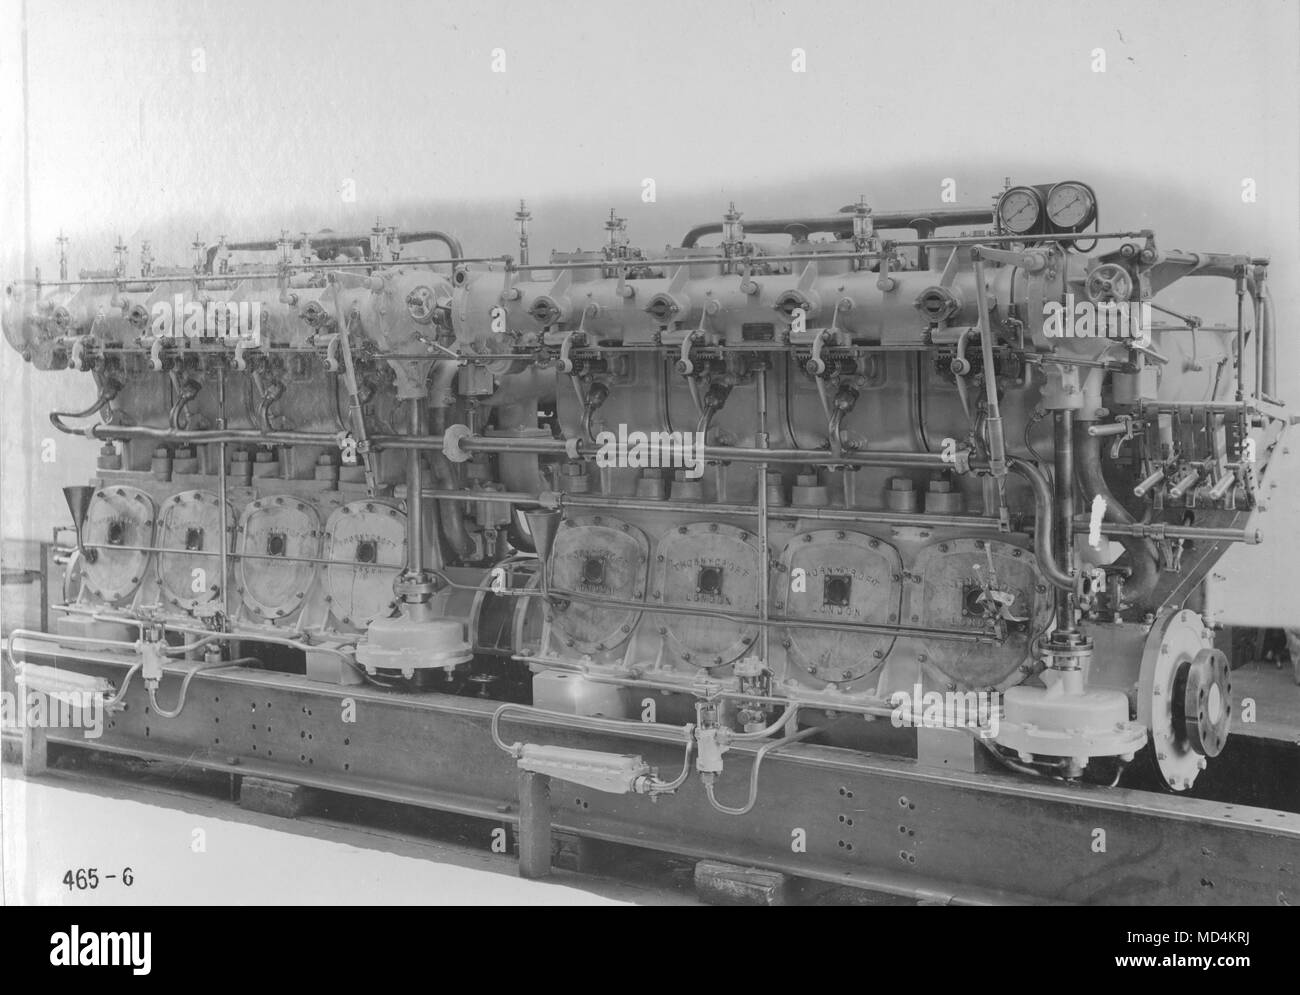 AJAXNETPHOTO. 1910-1920S (APPROX). SOUTHAMPTON, ENGLAND. - ROYAL ITALIAN SUBMARINES THORNYCROFT MOTOR - BUILT BY J. THORNYCROFT. 350 HORSE POWER. PHOTO:VT COLLECTION/AJAXNETPHOTO REF:AVL NA SUB MOTOR 465 6 Stock Photo